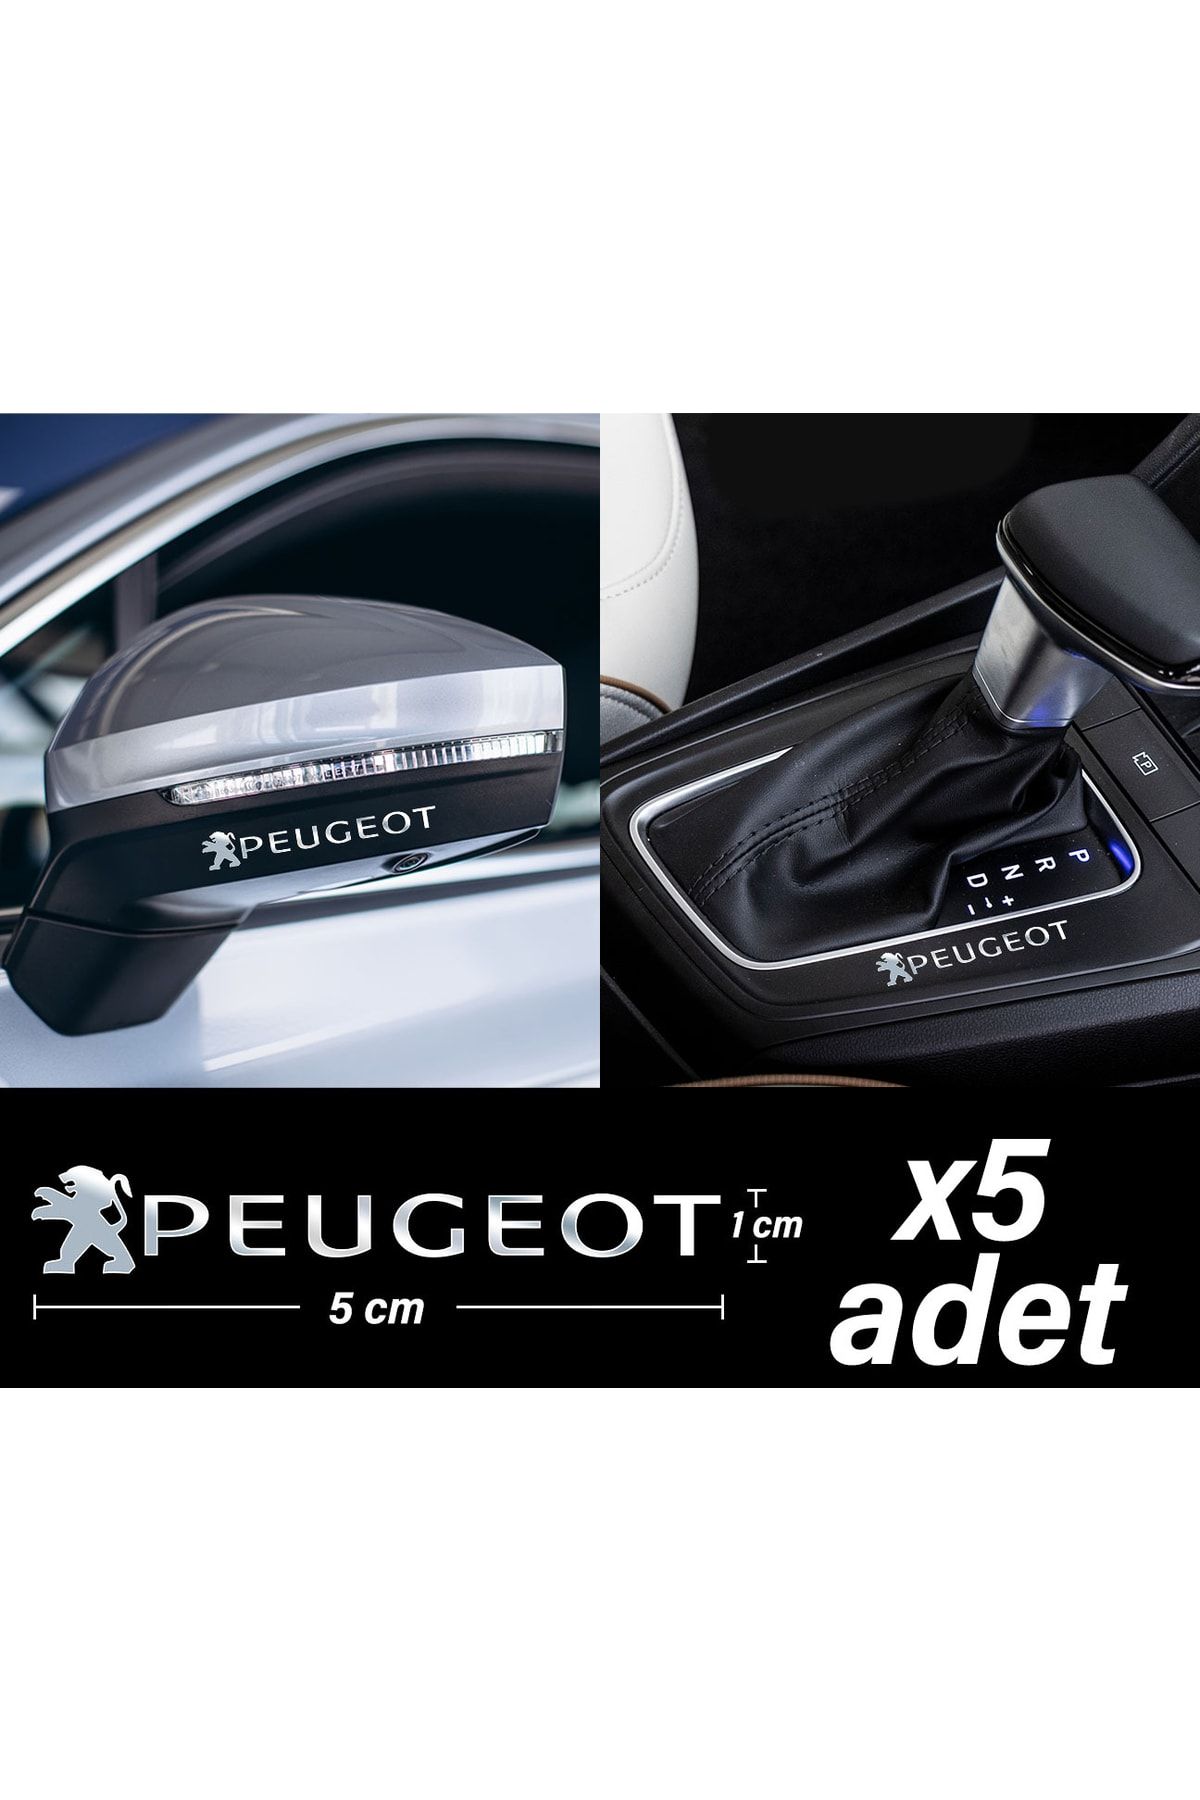 ÖZKAŞ Peugeot Için Metal Sticker 5 Adet Oto Aksesuar Oto Sticker Çıkartma Araba